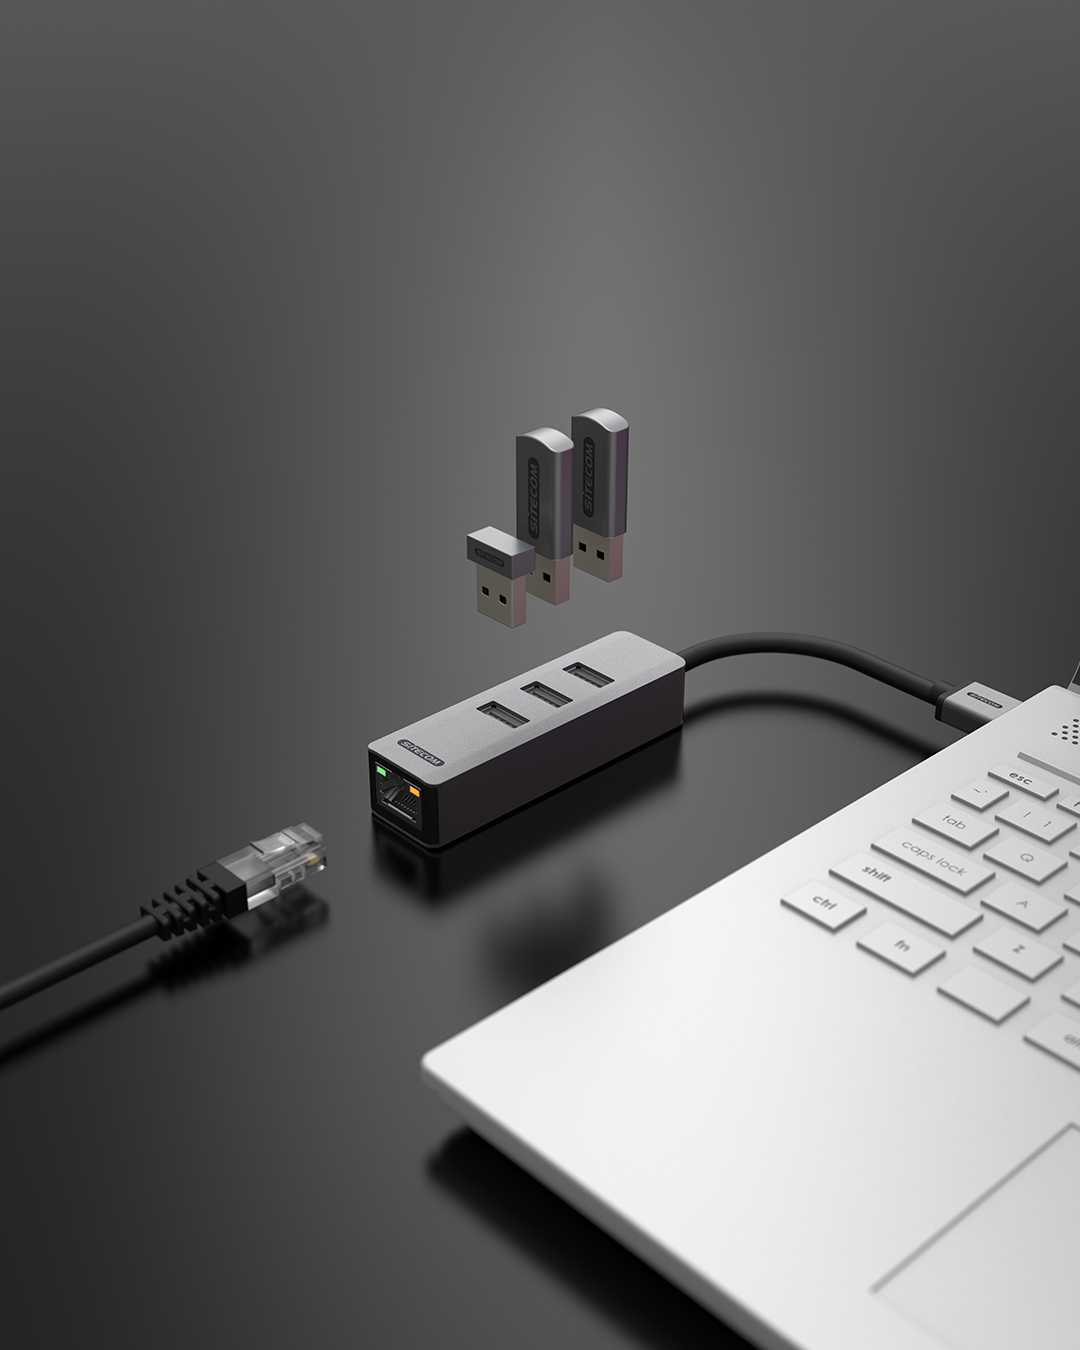 Sitecom - USB-A to Ethernet + 3x USB hub - AD-1007